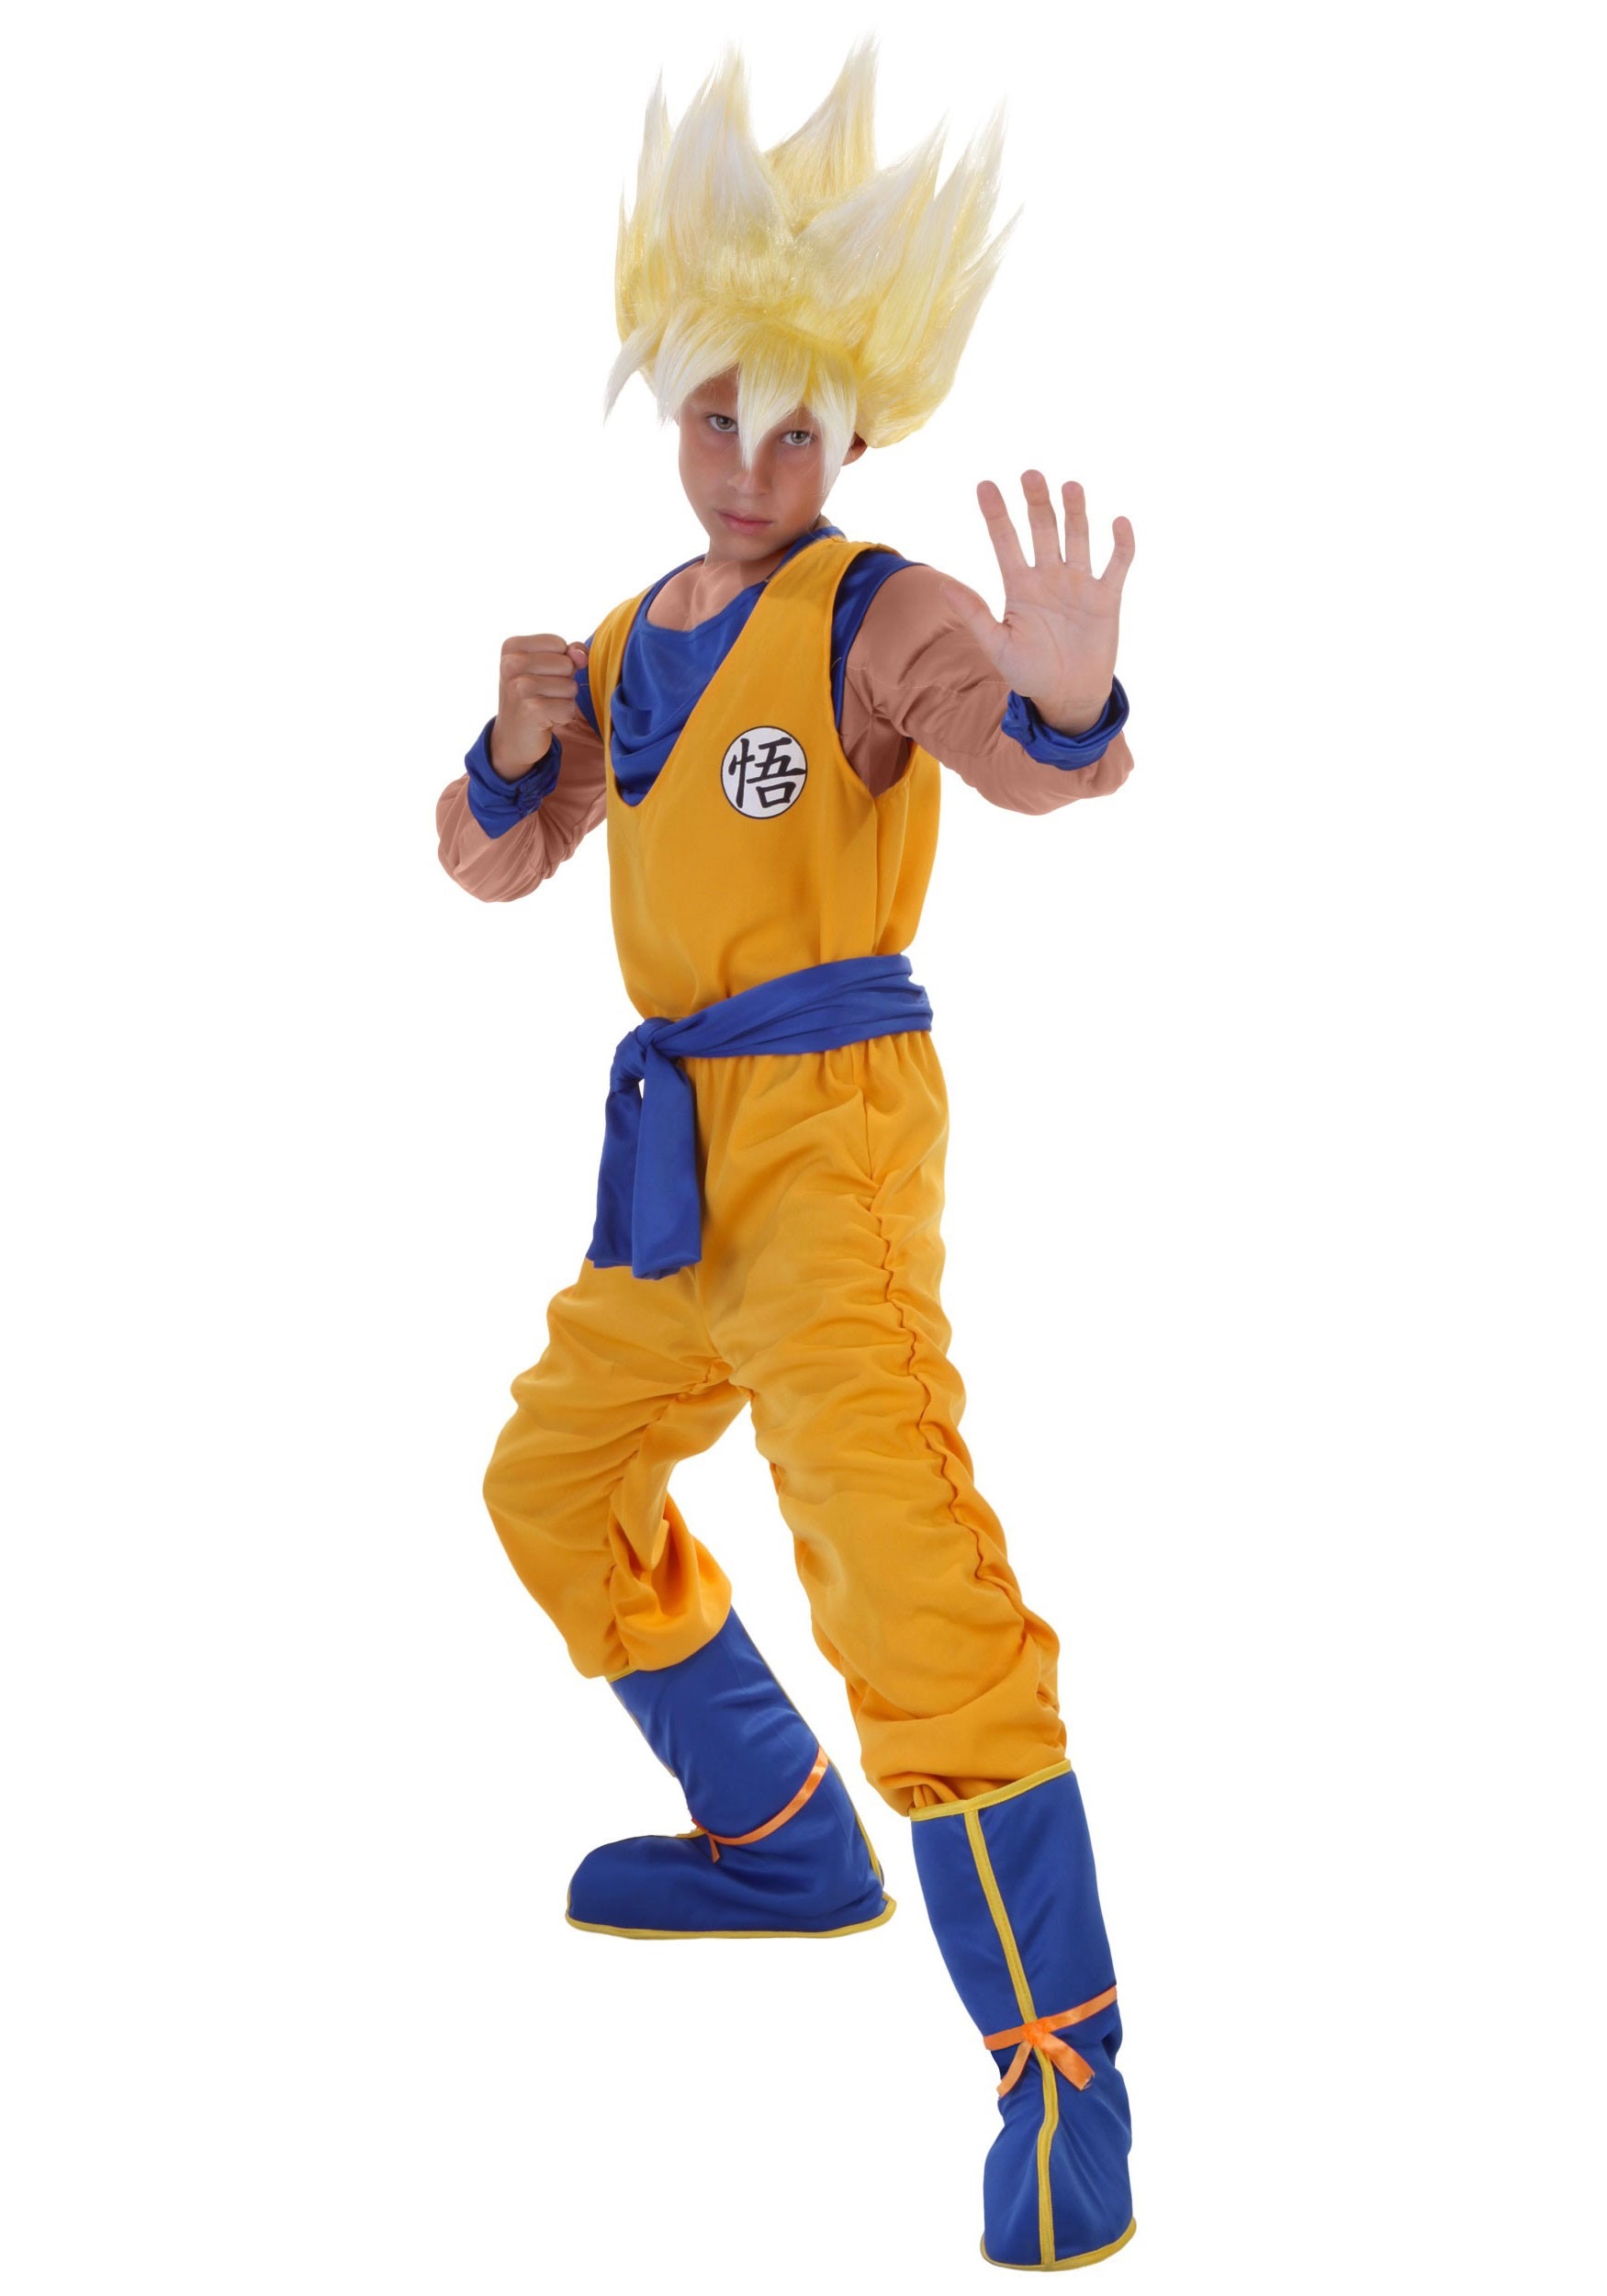 Photos - Fancy Dress FUN Costumes Dragon Ball Z Super Saiyan Kid's Goku Costume Blue/Orange